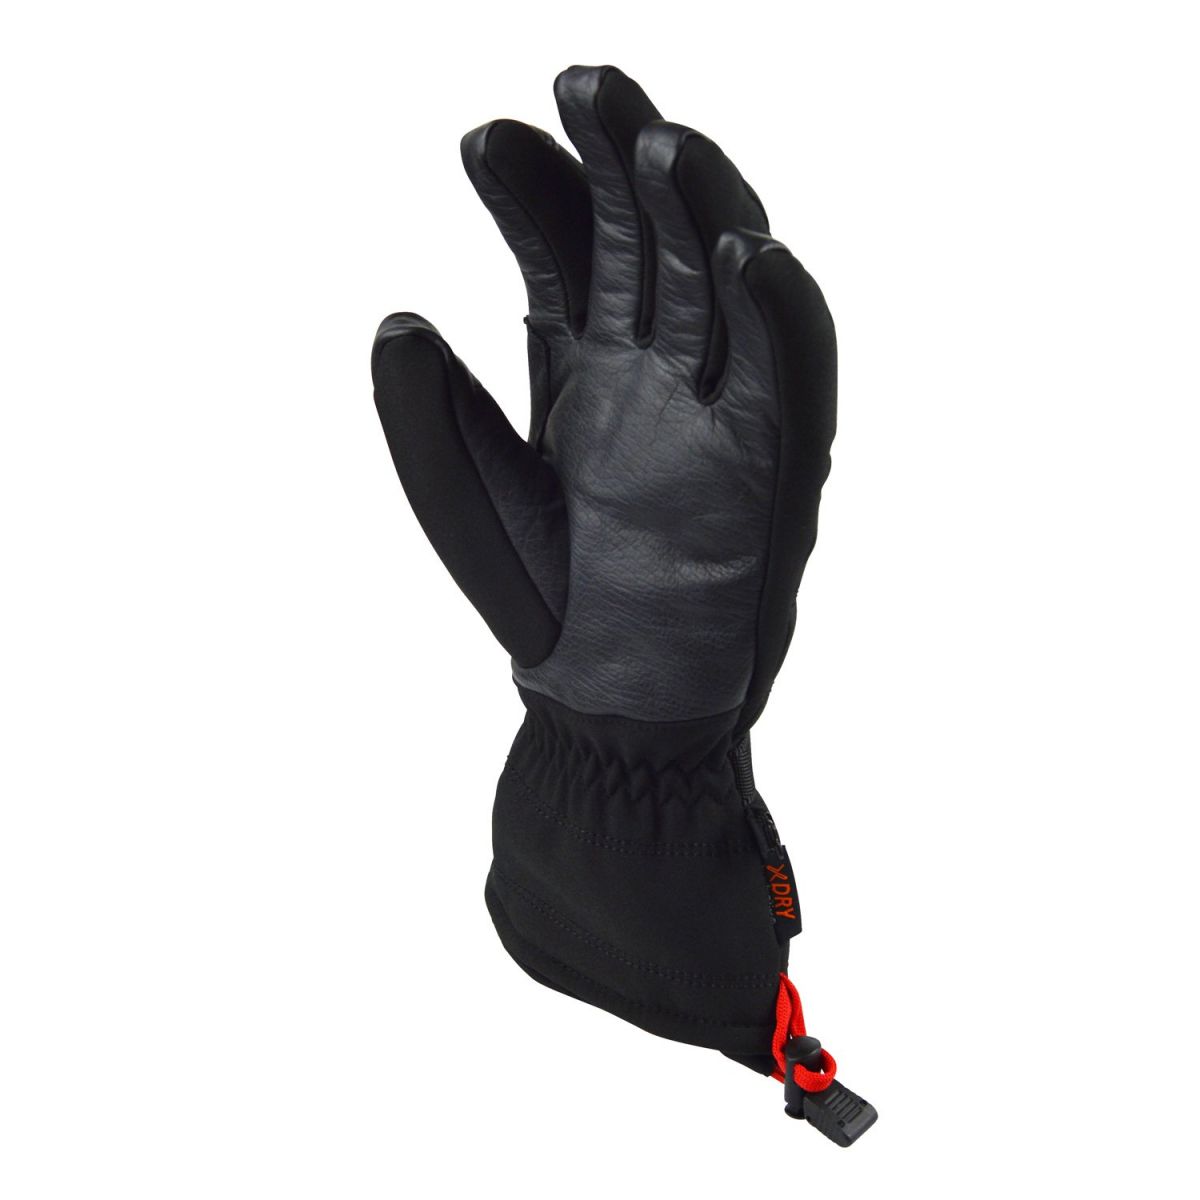 Extremities Pinnacle Glove